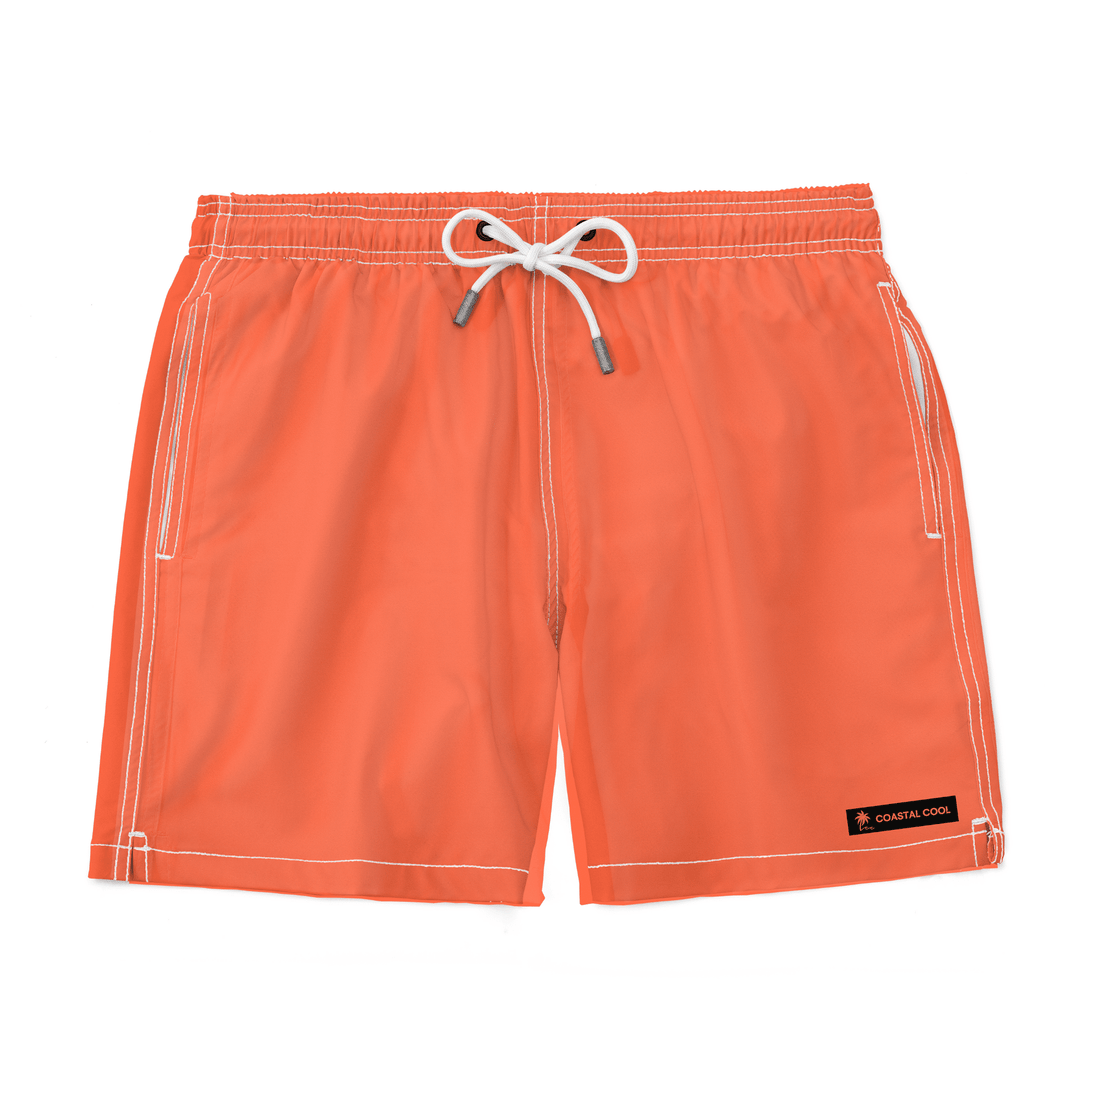 Orange Solid Swim Trunks  Coastal Cool    Sustainable | Recycled | Swimwear | Beachwear | Travel and Vacation | Coastal Cool Swimwear | Coastal Cool Beachwear